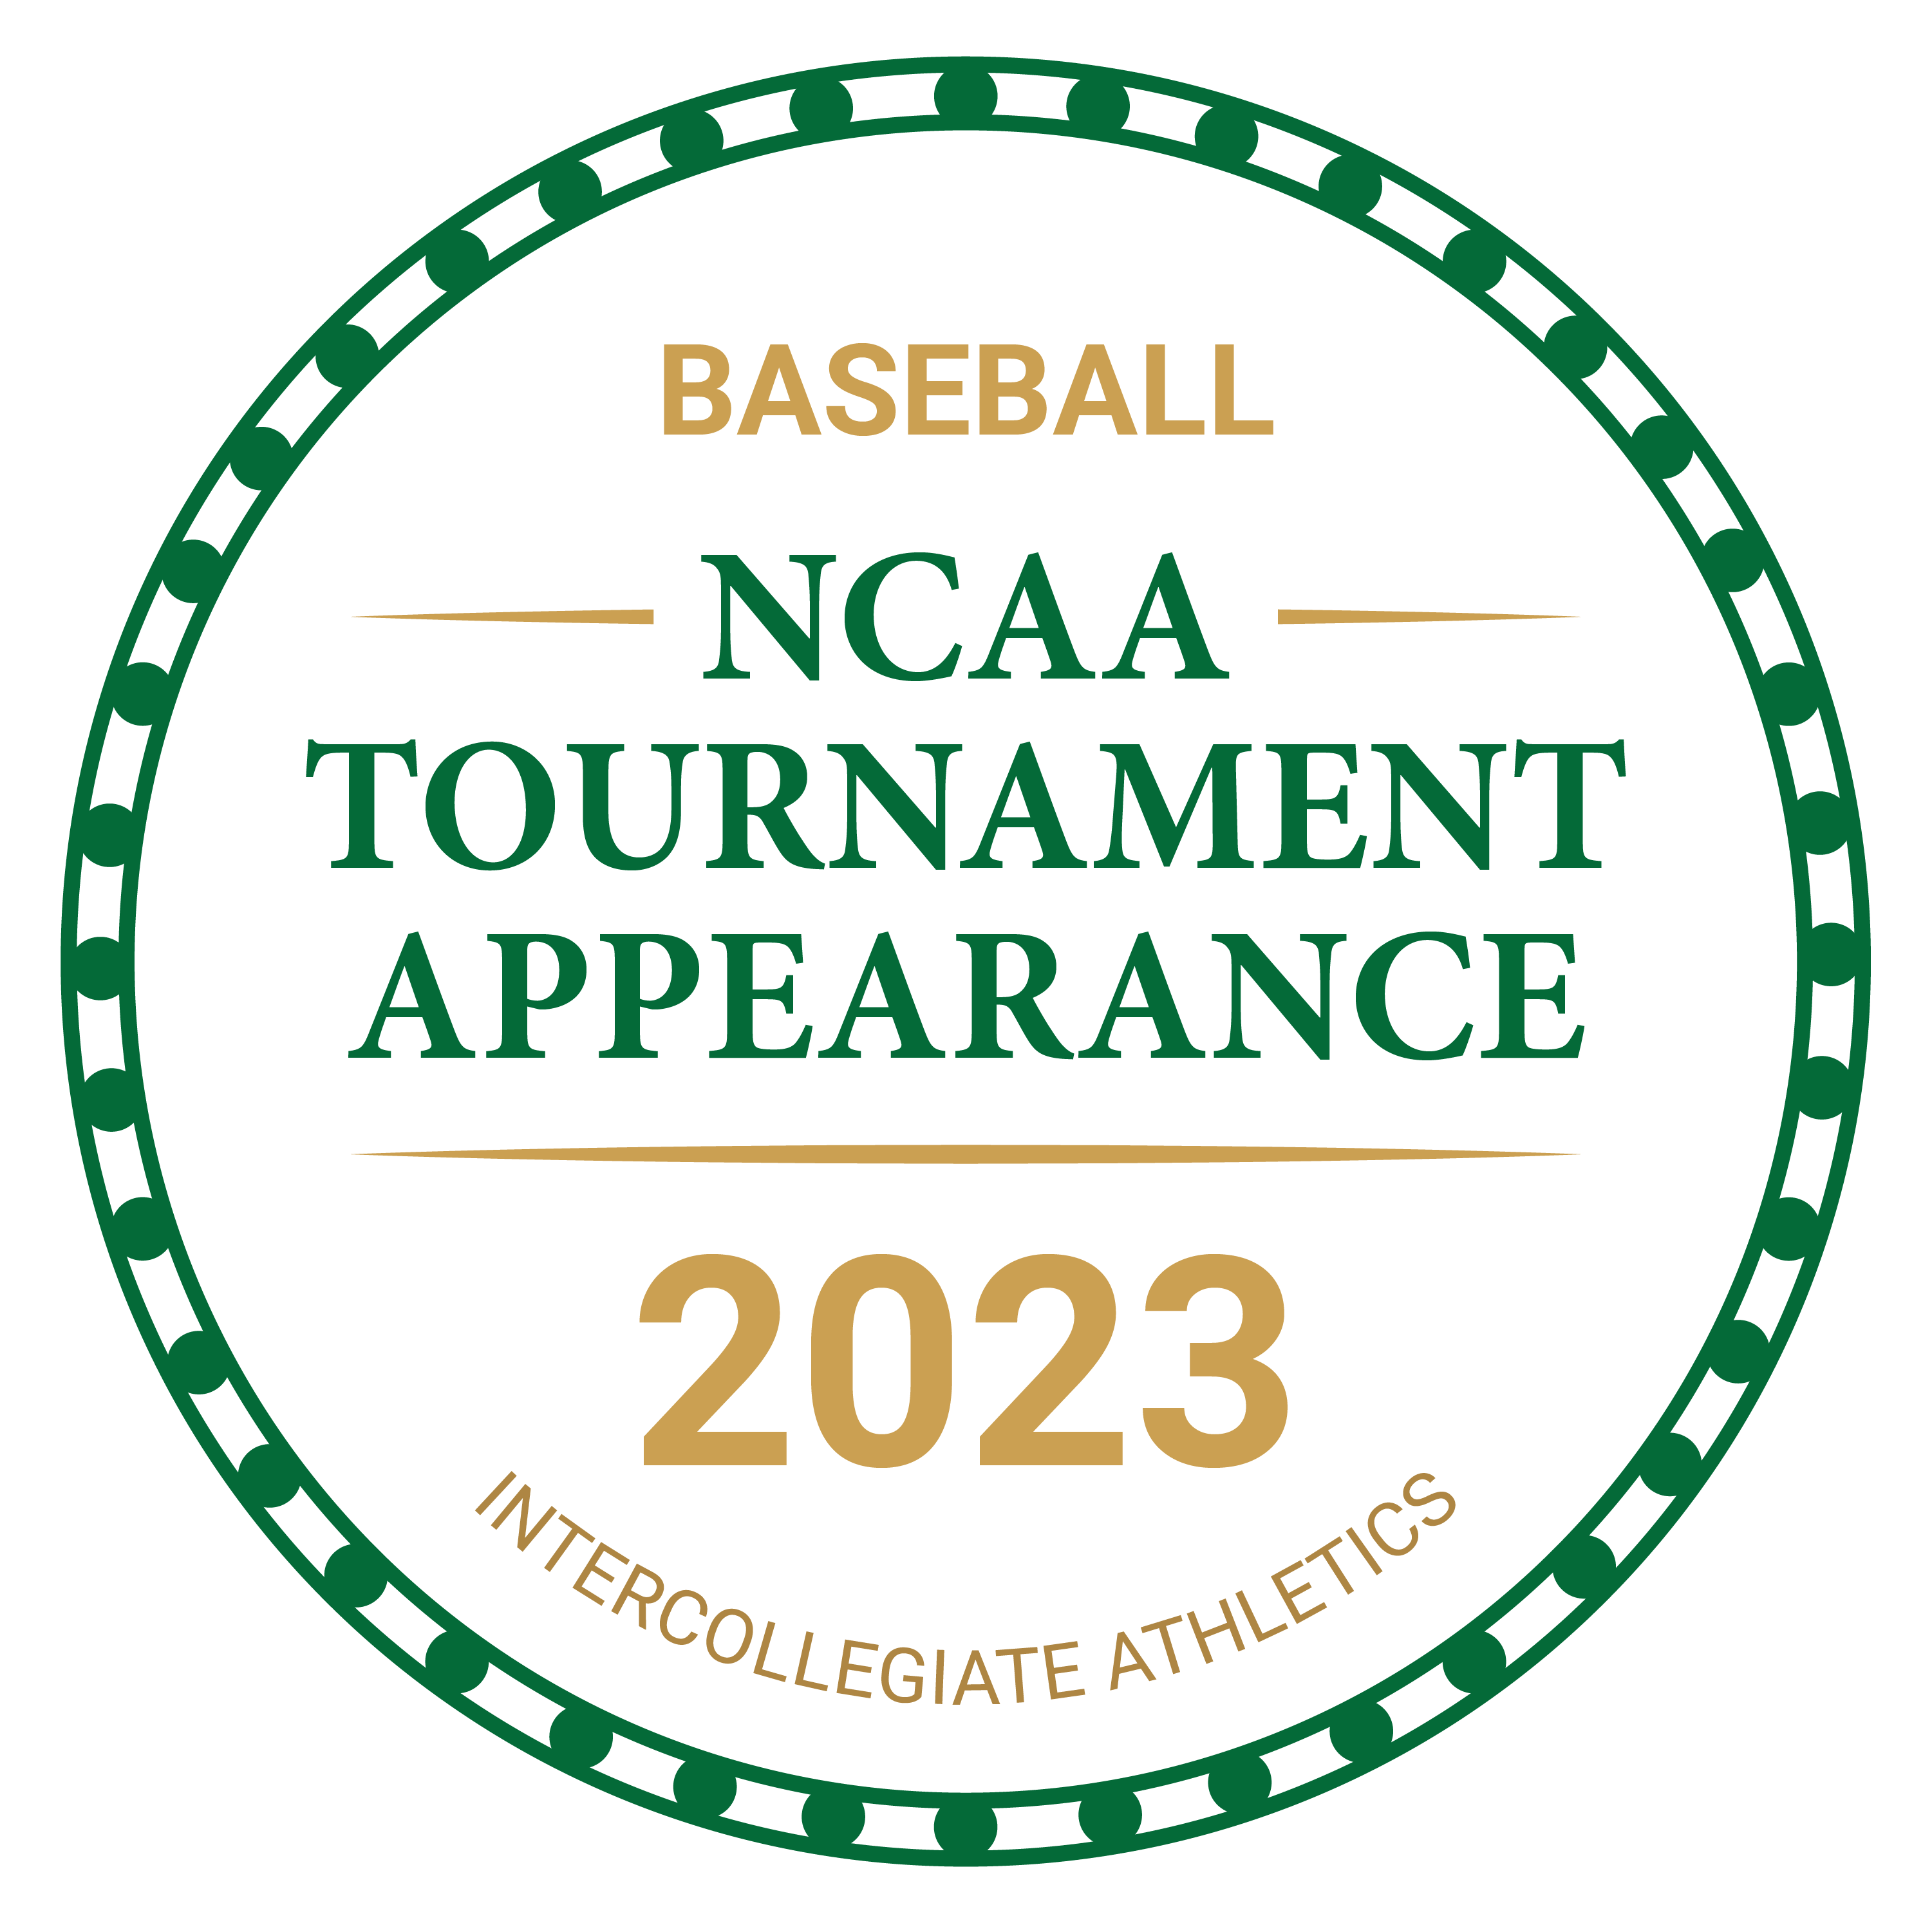 2022 Intercollegiate Athletics NCAA Tournament Appearance Baseball